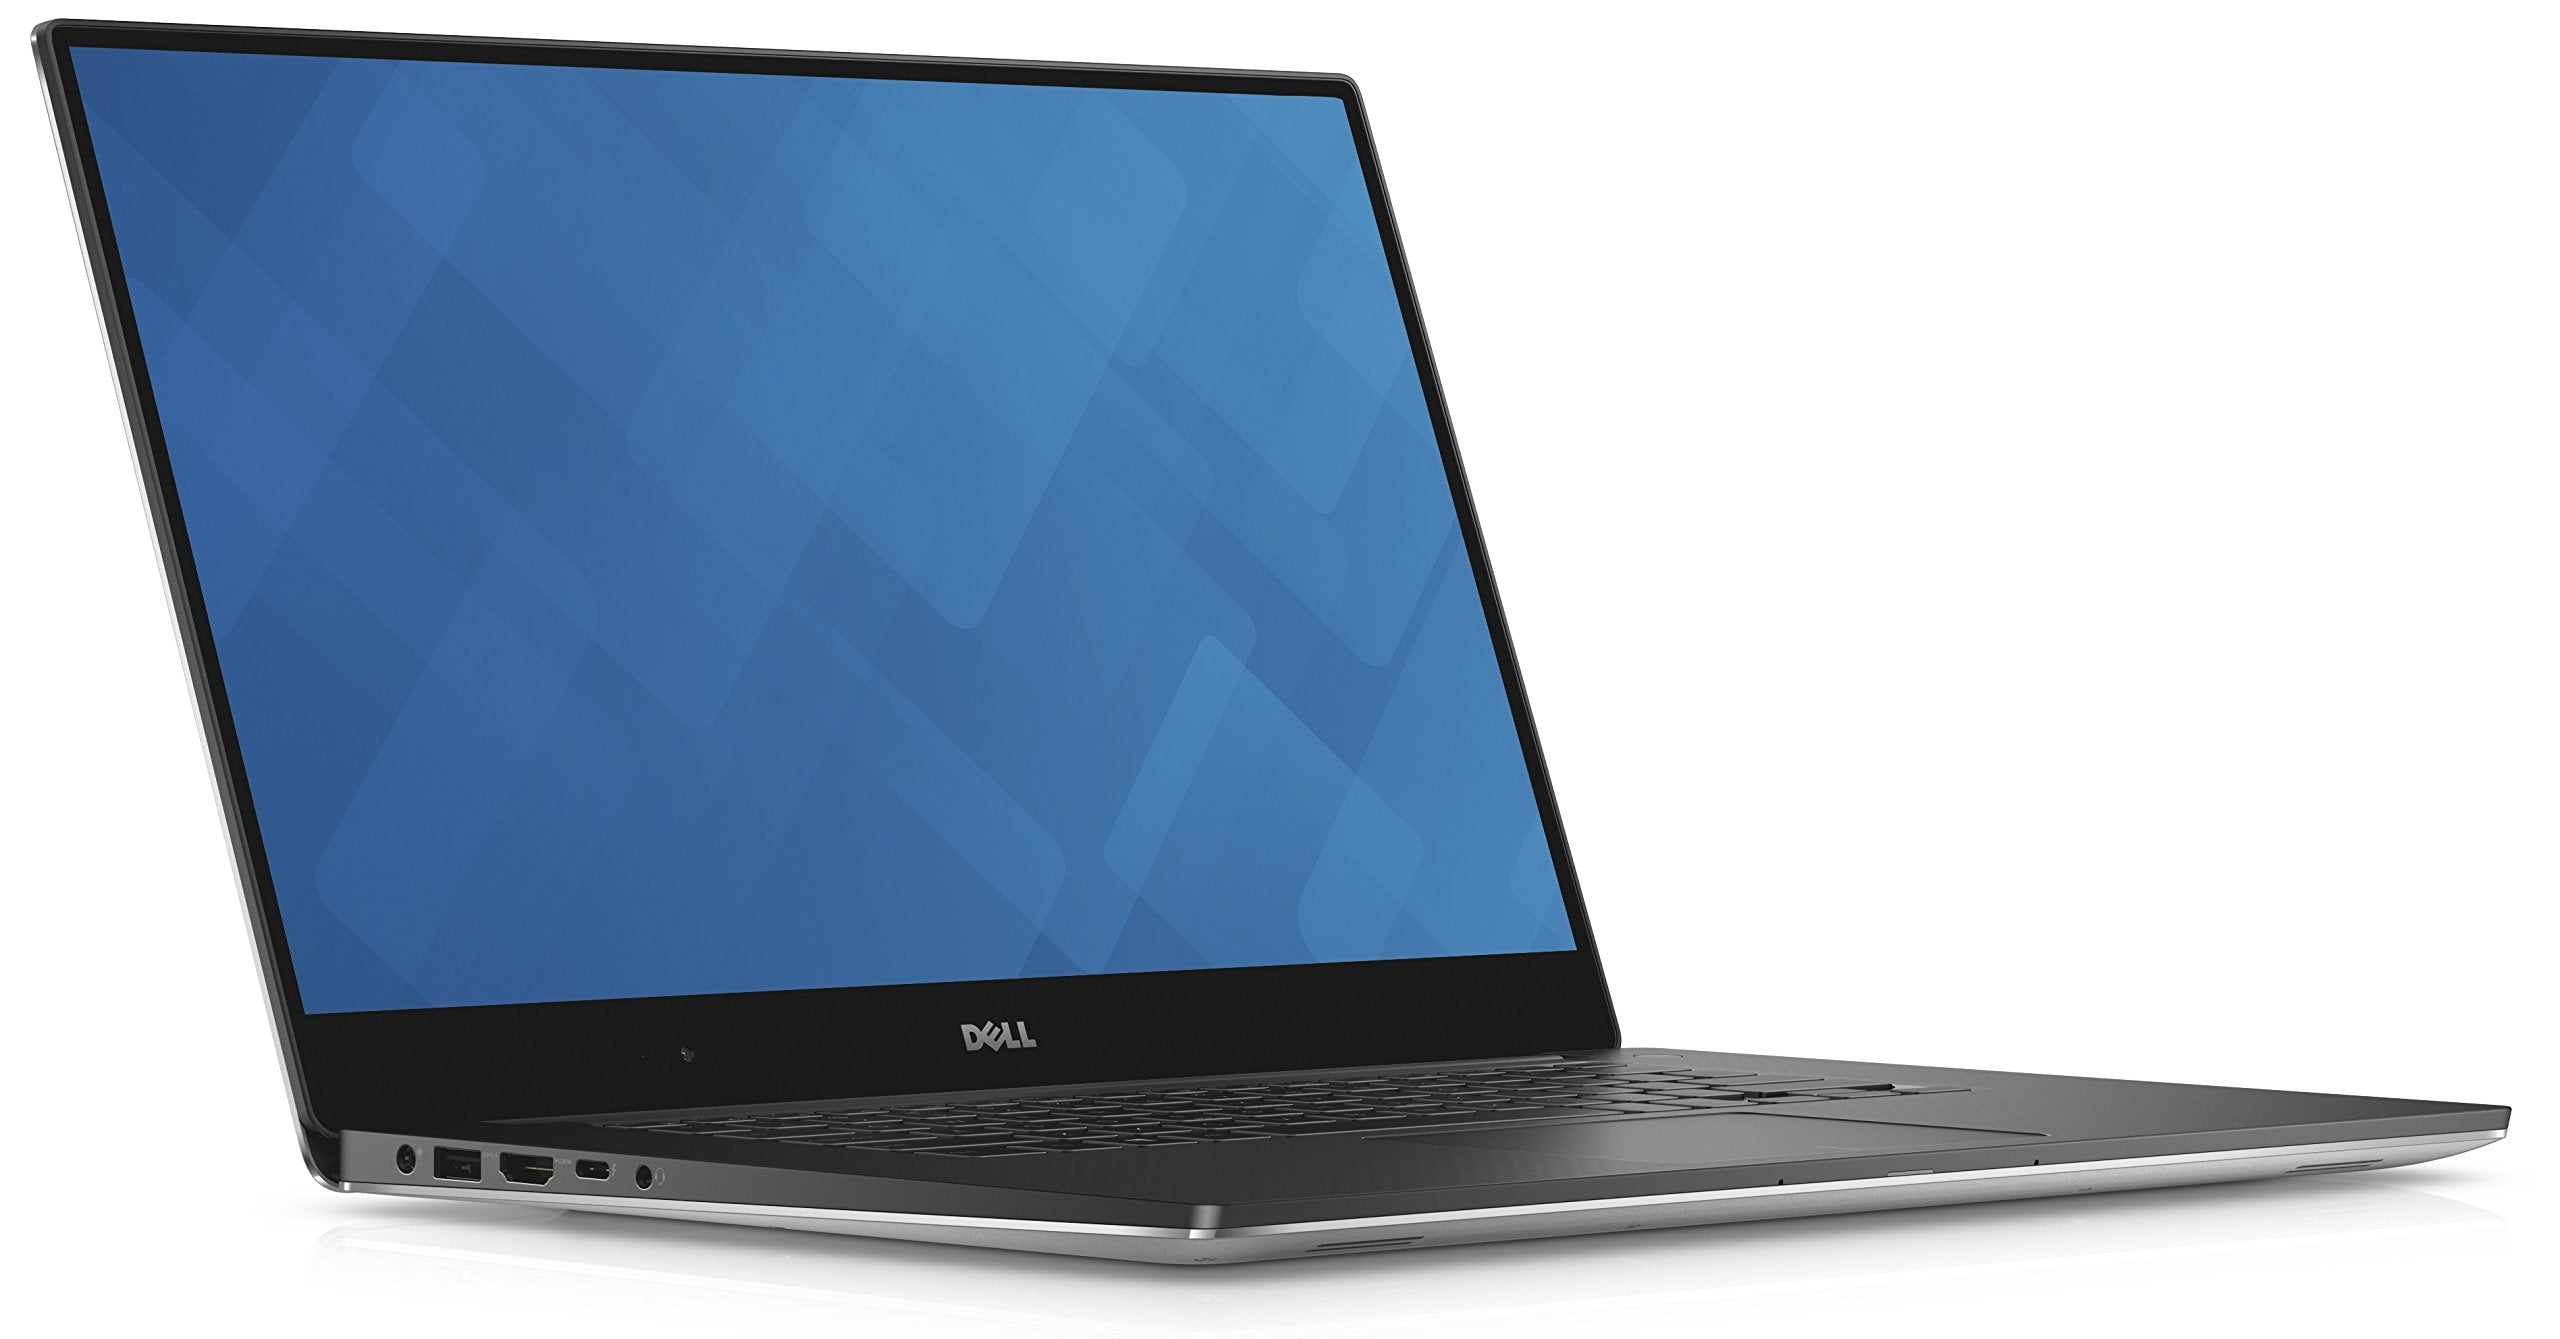 Dell XPS 15 9560 15.6” 4K UHD Touch Laptop – i7-7700HQ (3.8GHz), 16GB DDR4 RAM, 1TB NVMe SSD, NVIDIA GeForce GTX 1050, SD Card Reader, WIFI 5 & BT 5, Windows 10 Pro, Backlit Keyboard